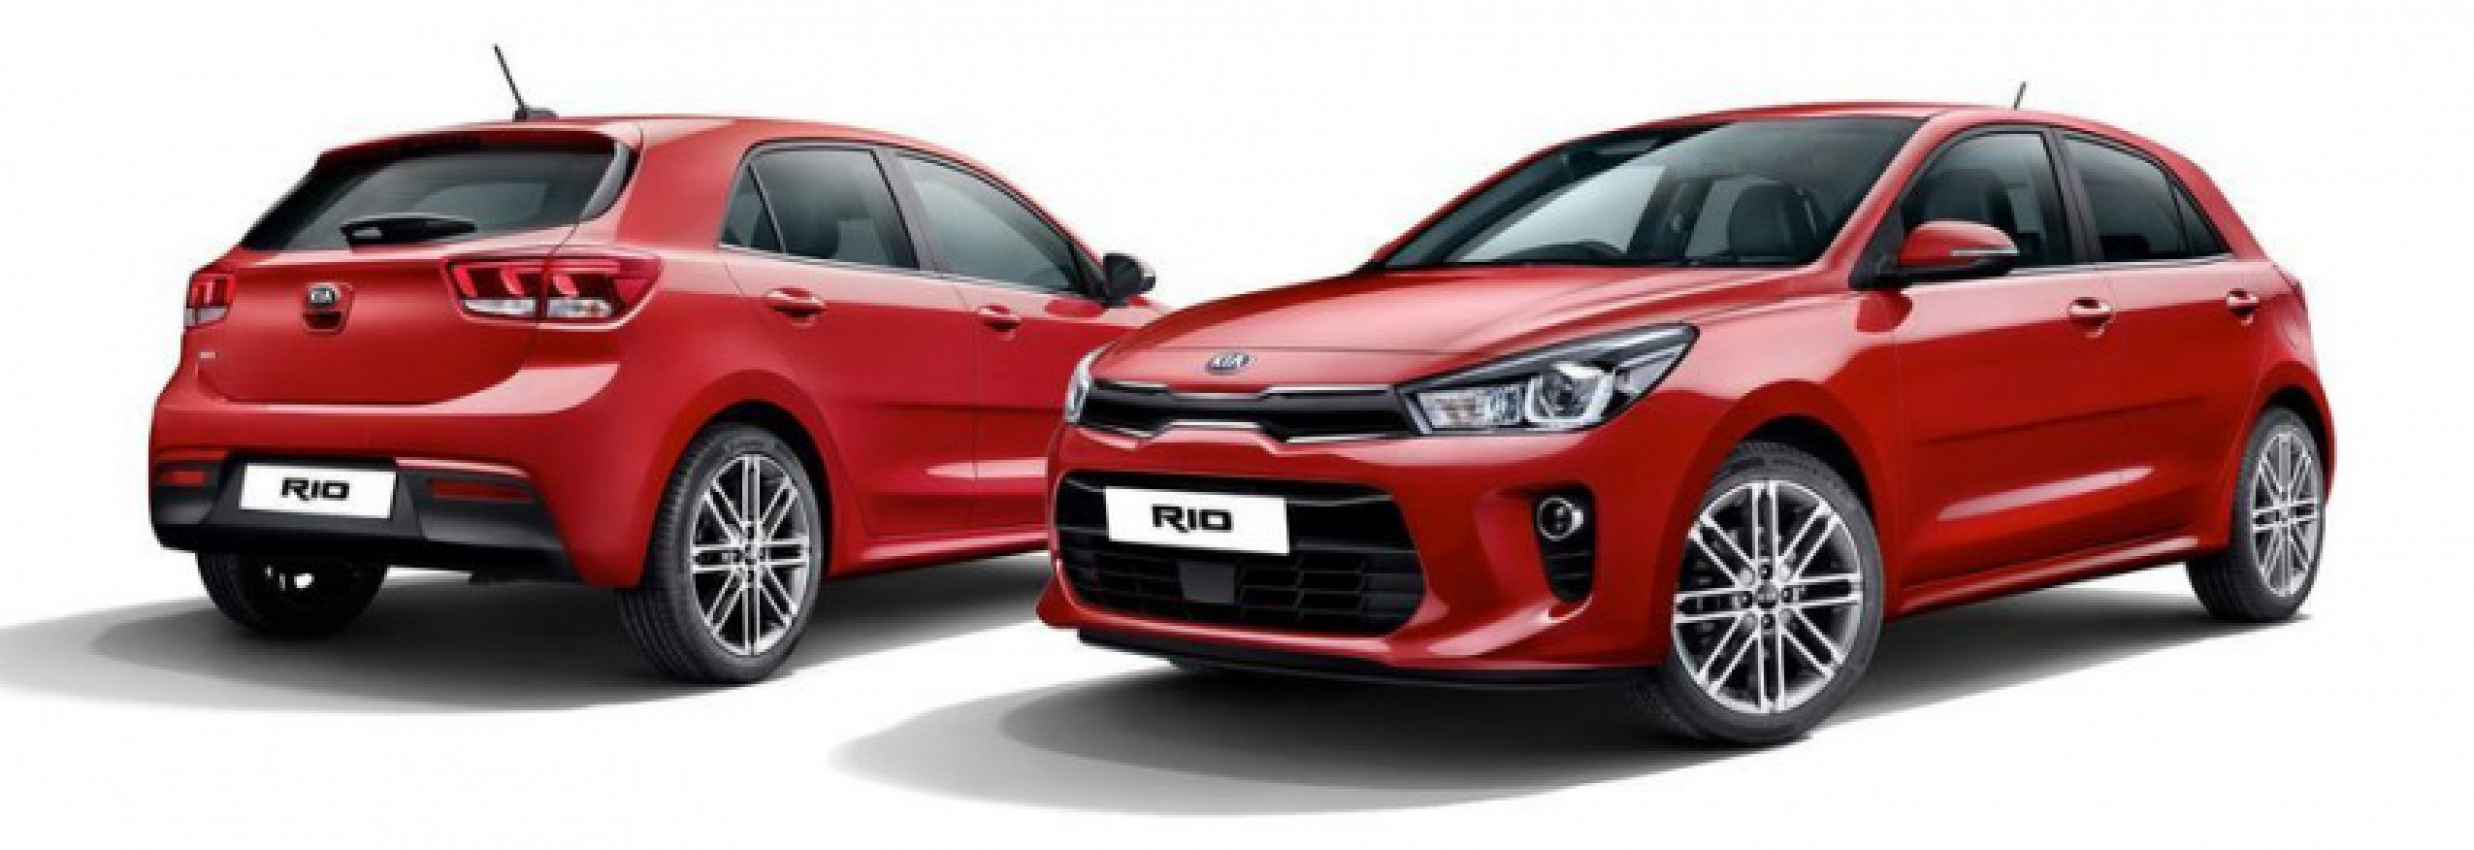 autos, cars, kia, auto news, kia malaysia, naza, naza kia, naza kia to launch six new models in malaysia this year